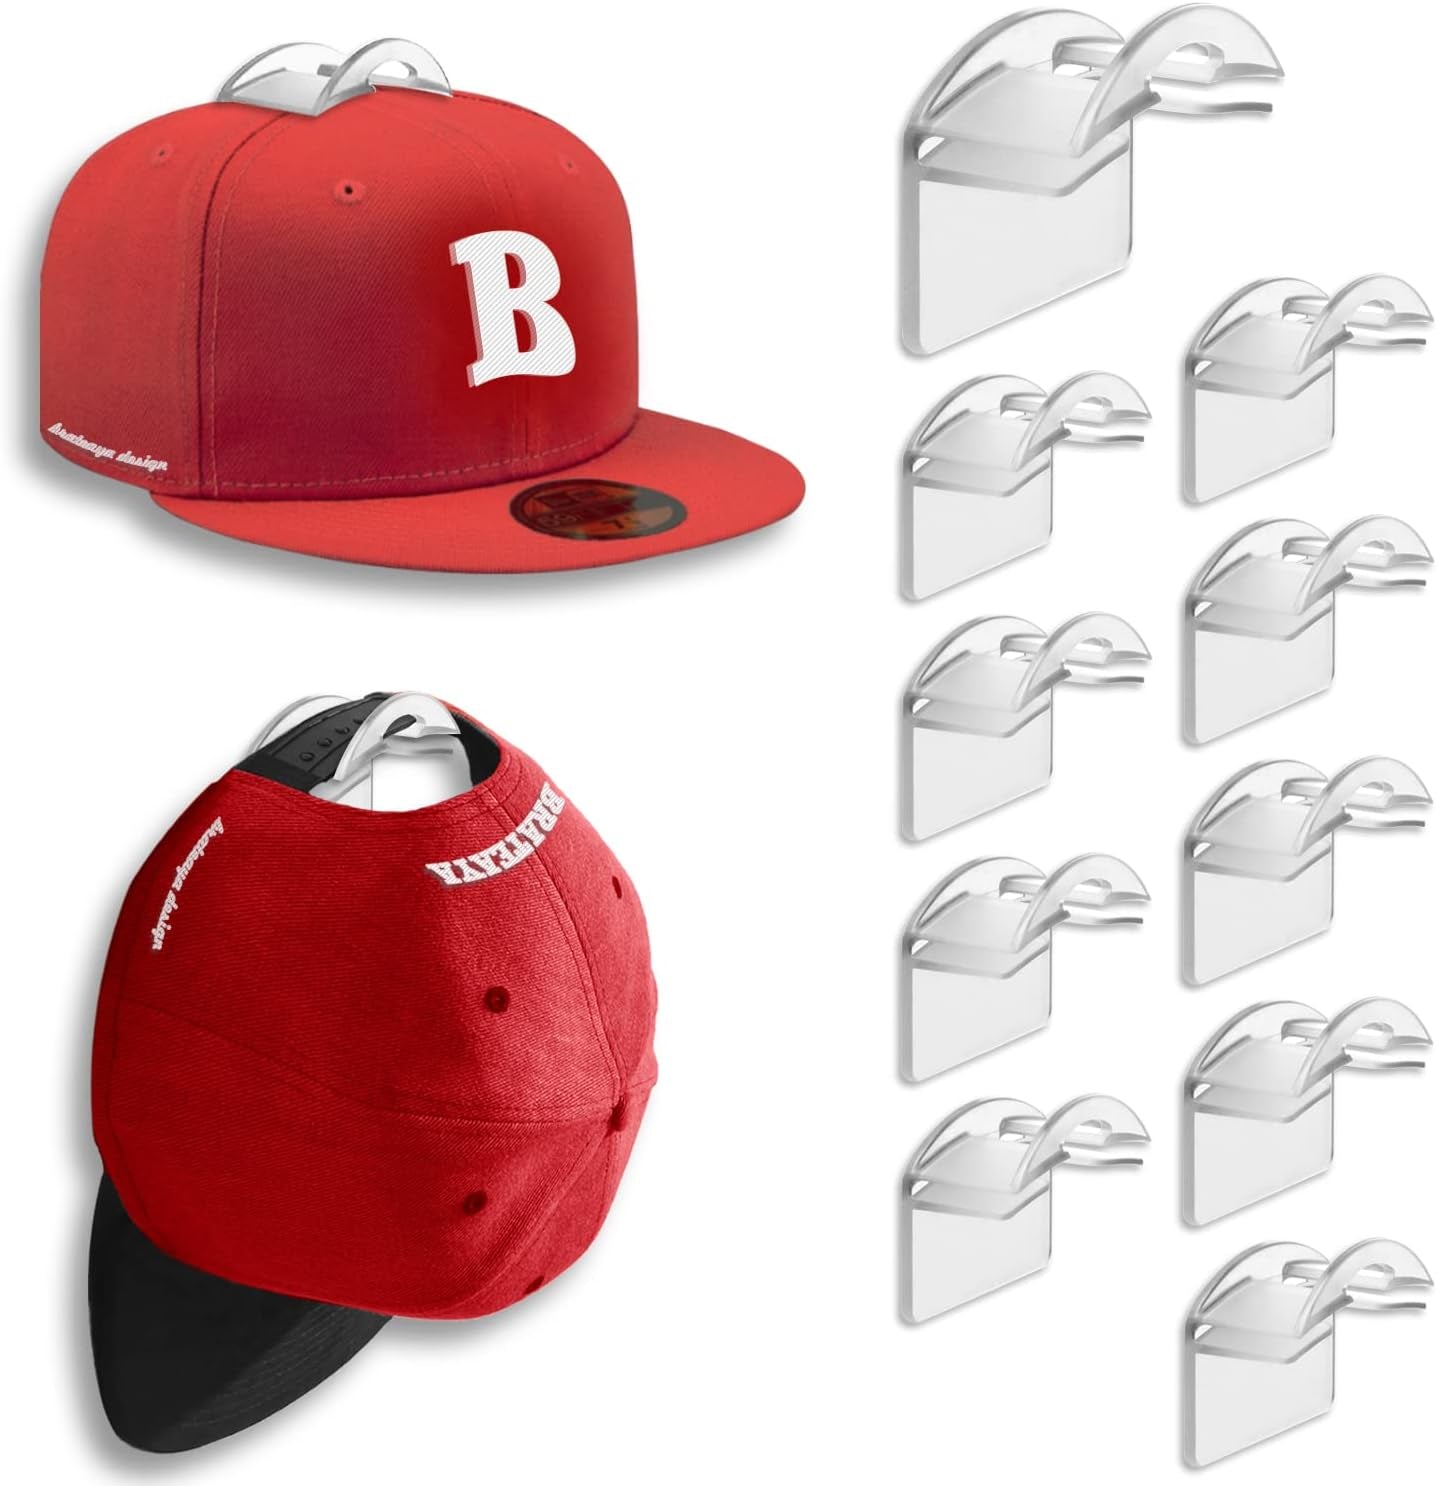 Adhesive Hat Hooks for Wall/Door, Wall Mount Hat Rack Baseball Cap Hangers  Ball Cap Organizer Holders for Hats Display on Wall, Closet, Door